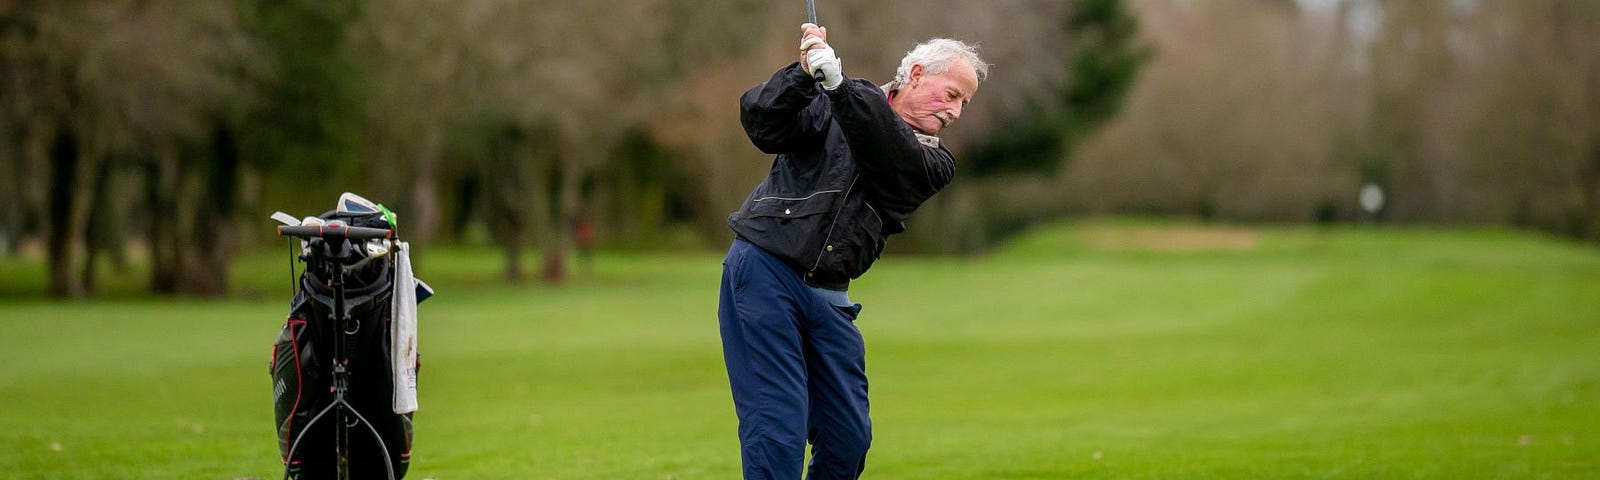 An older man playing golf.